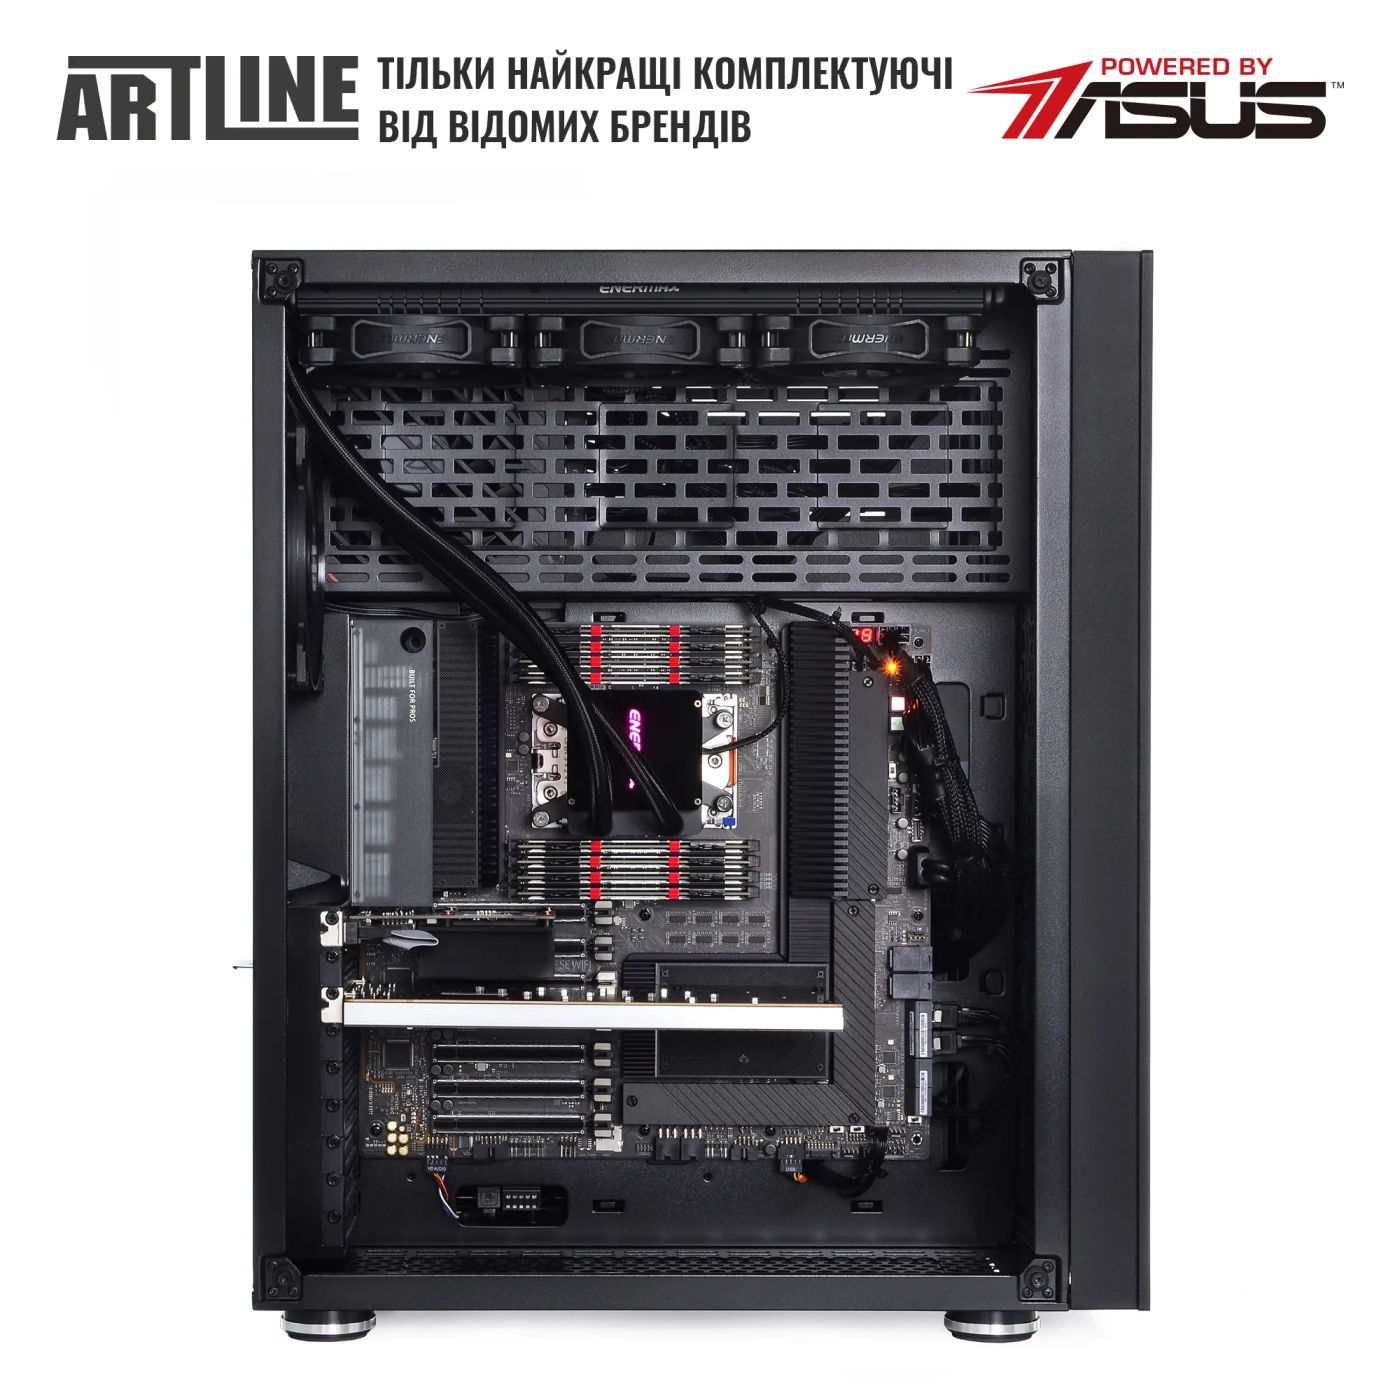 Купити Сервер ARTLINE Business T85v06 - фото 5